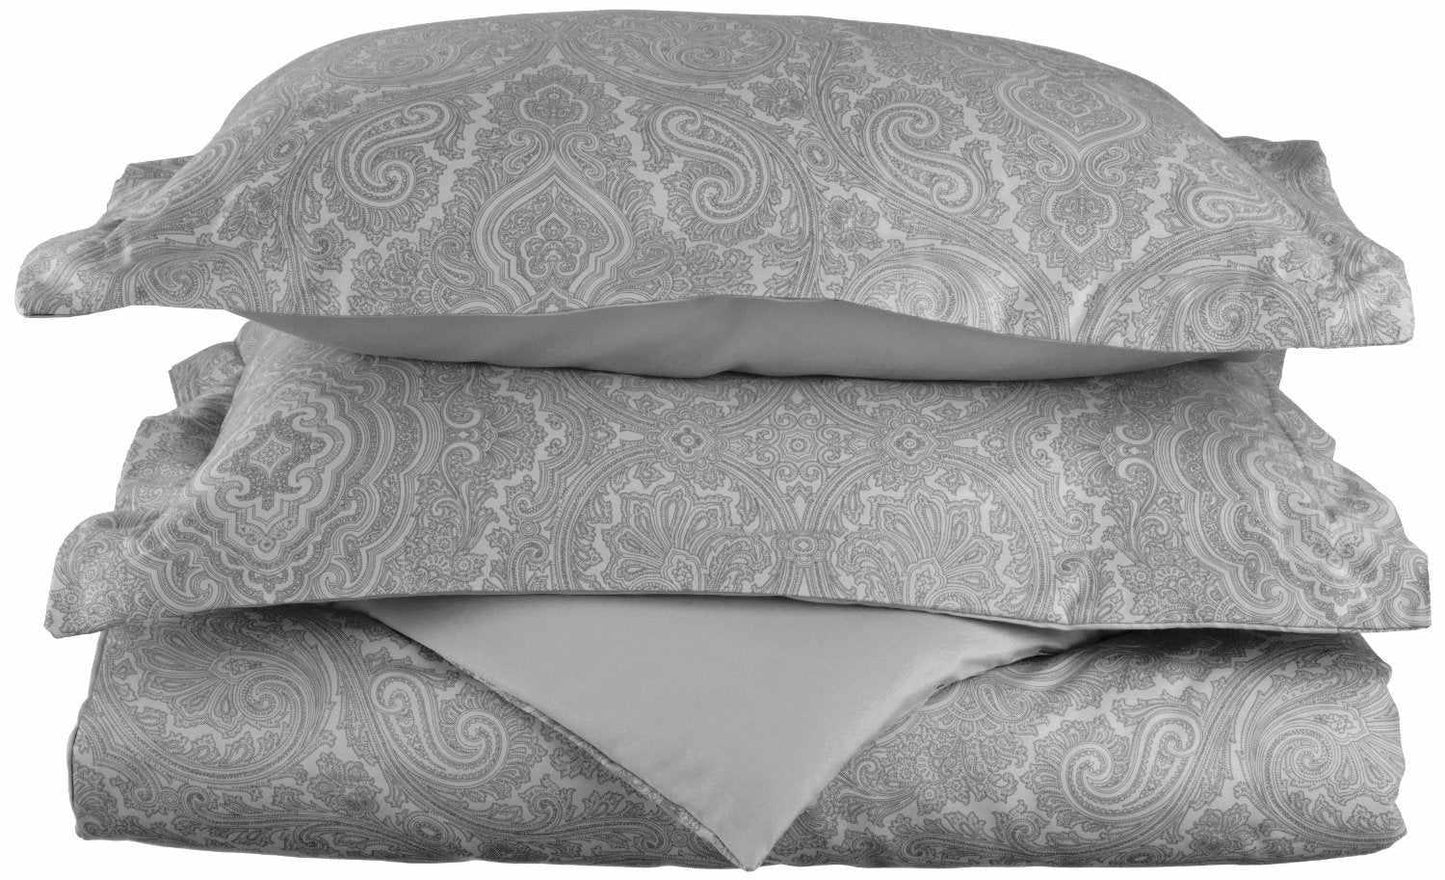 600-Thread Count Cotton-Rich Wrinkle-Resistant Paisley Duvet Cover Set FredCo